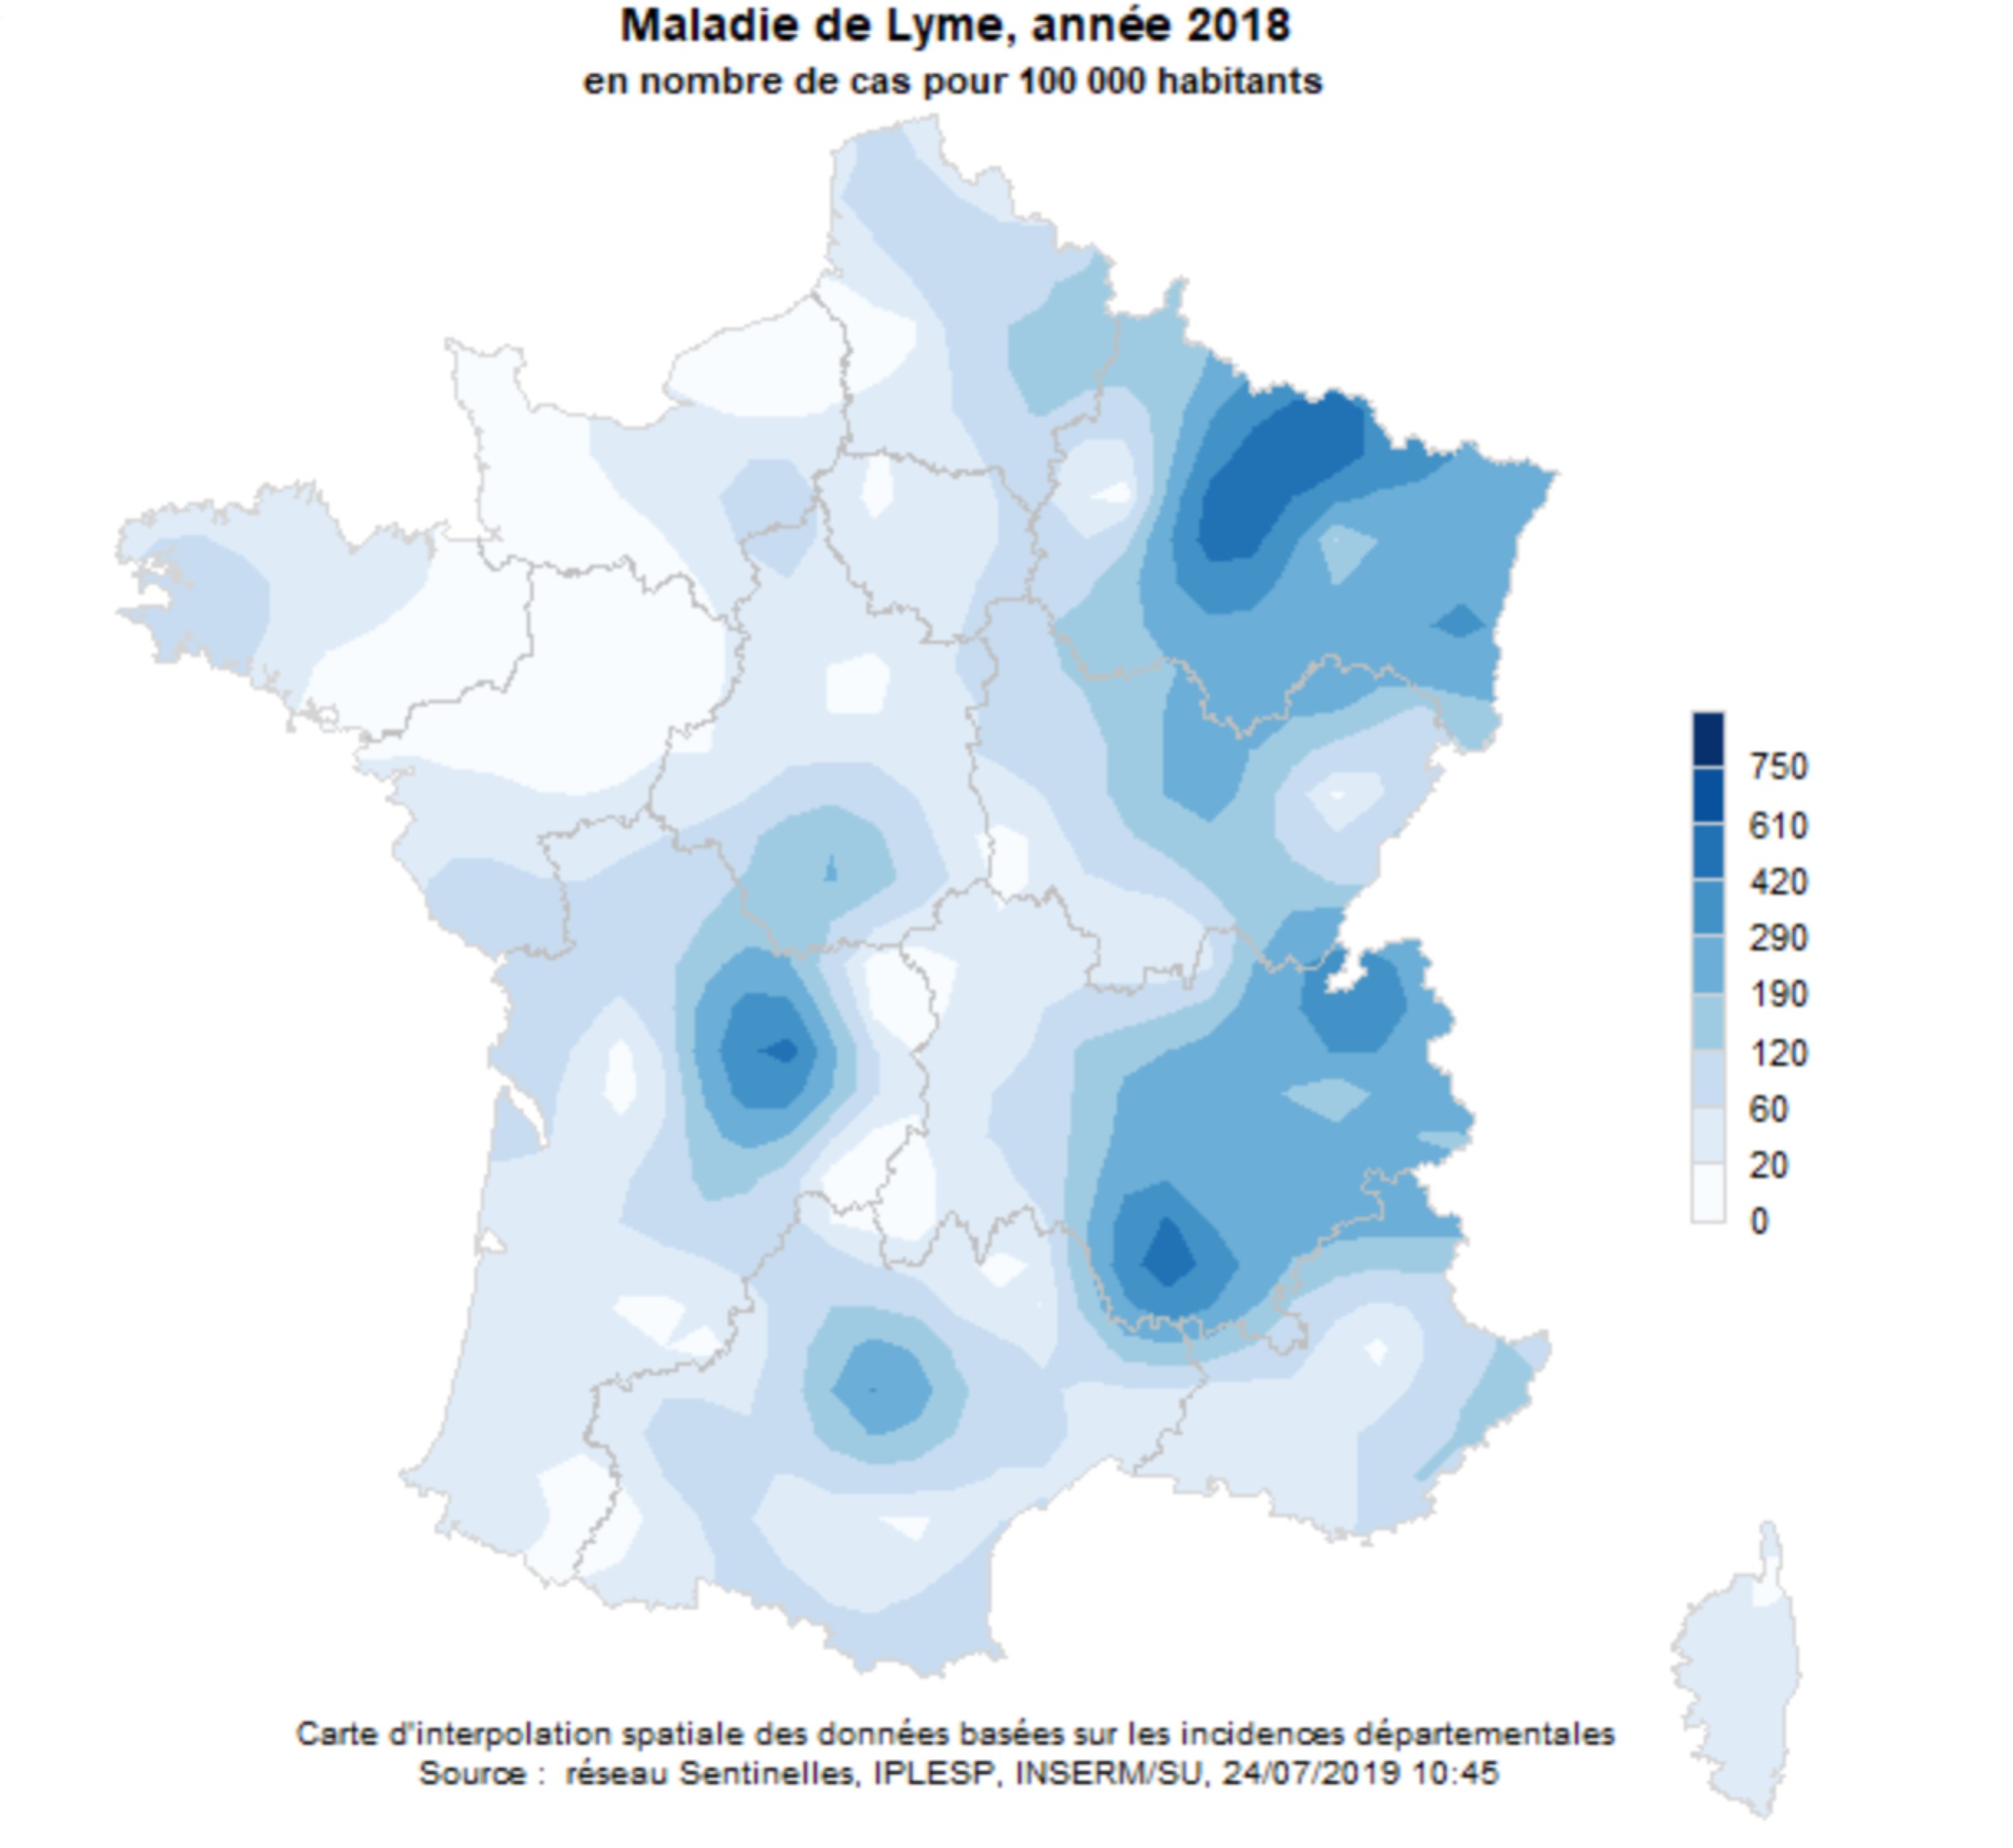 Carte du nombre de cas de maladie de Lyme en France en 2018